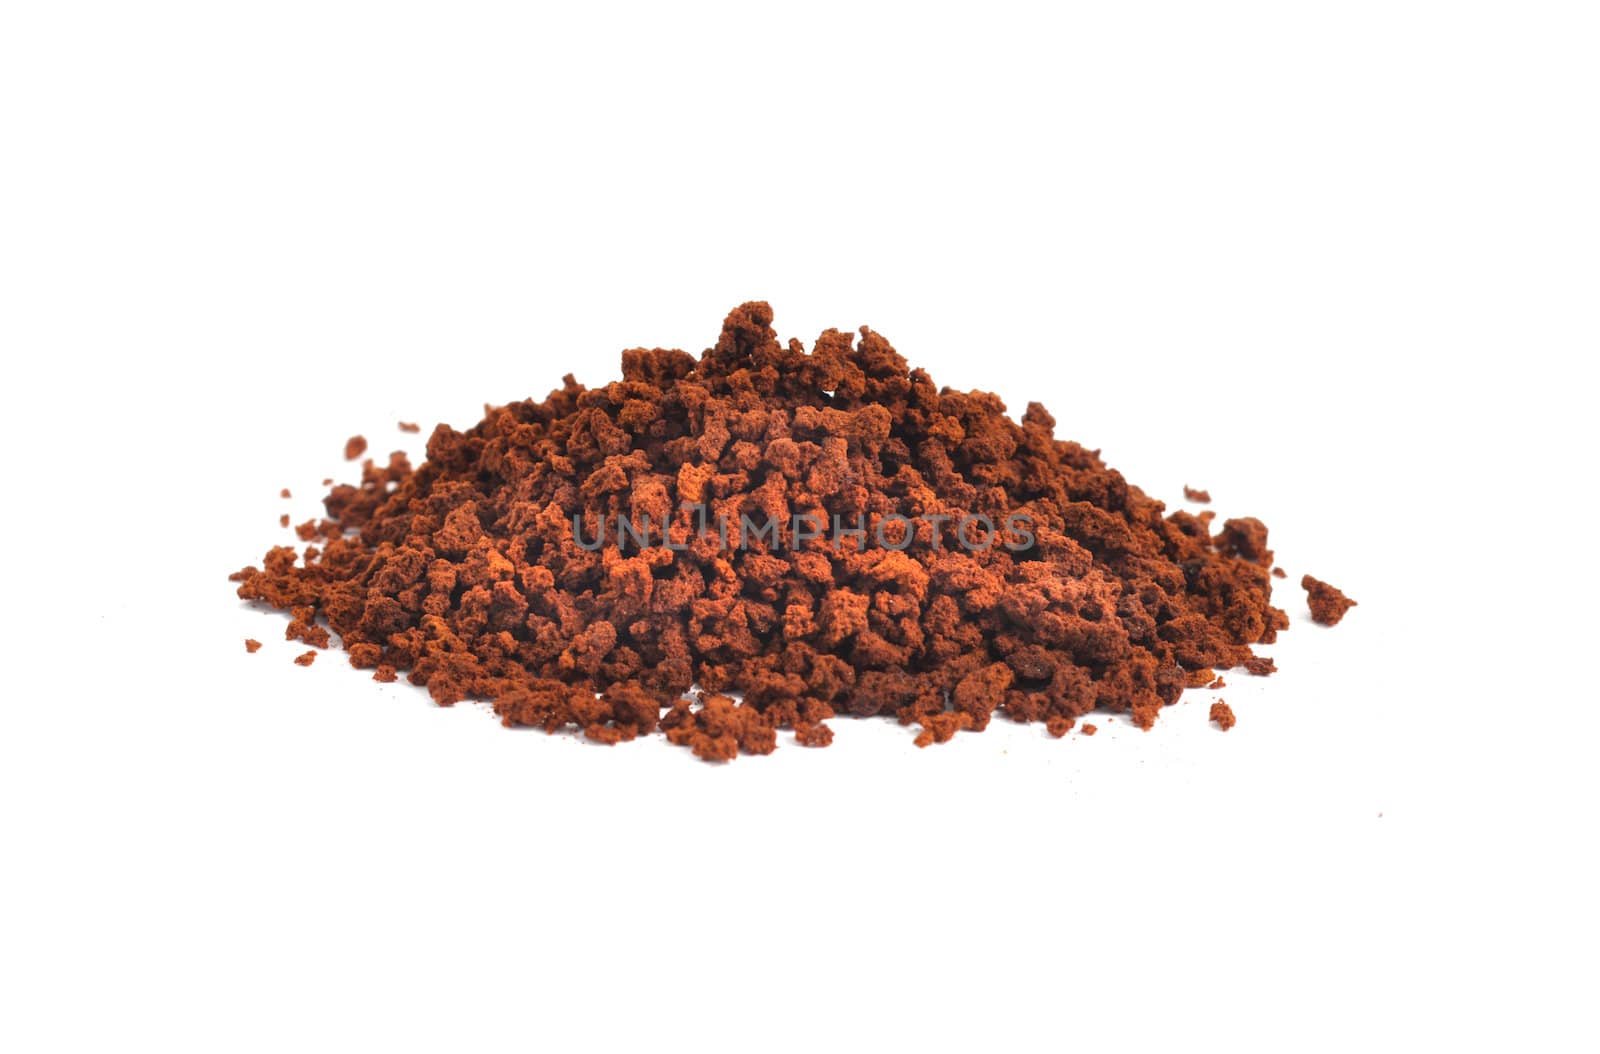 Pile of Coffe Powder by Rainman